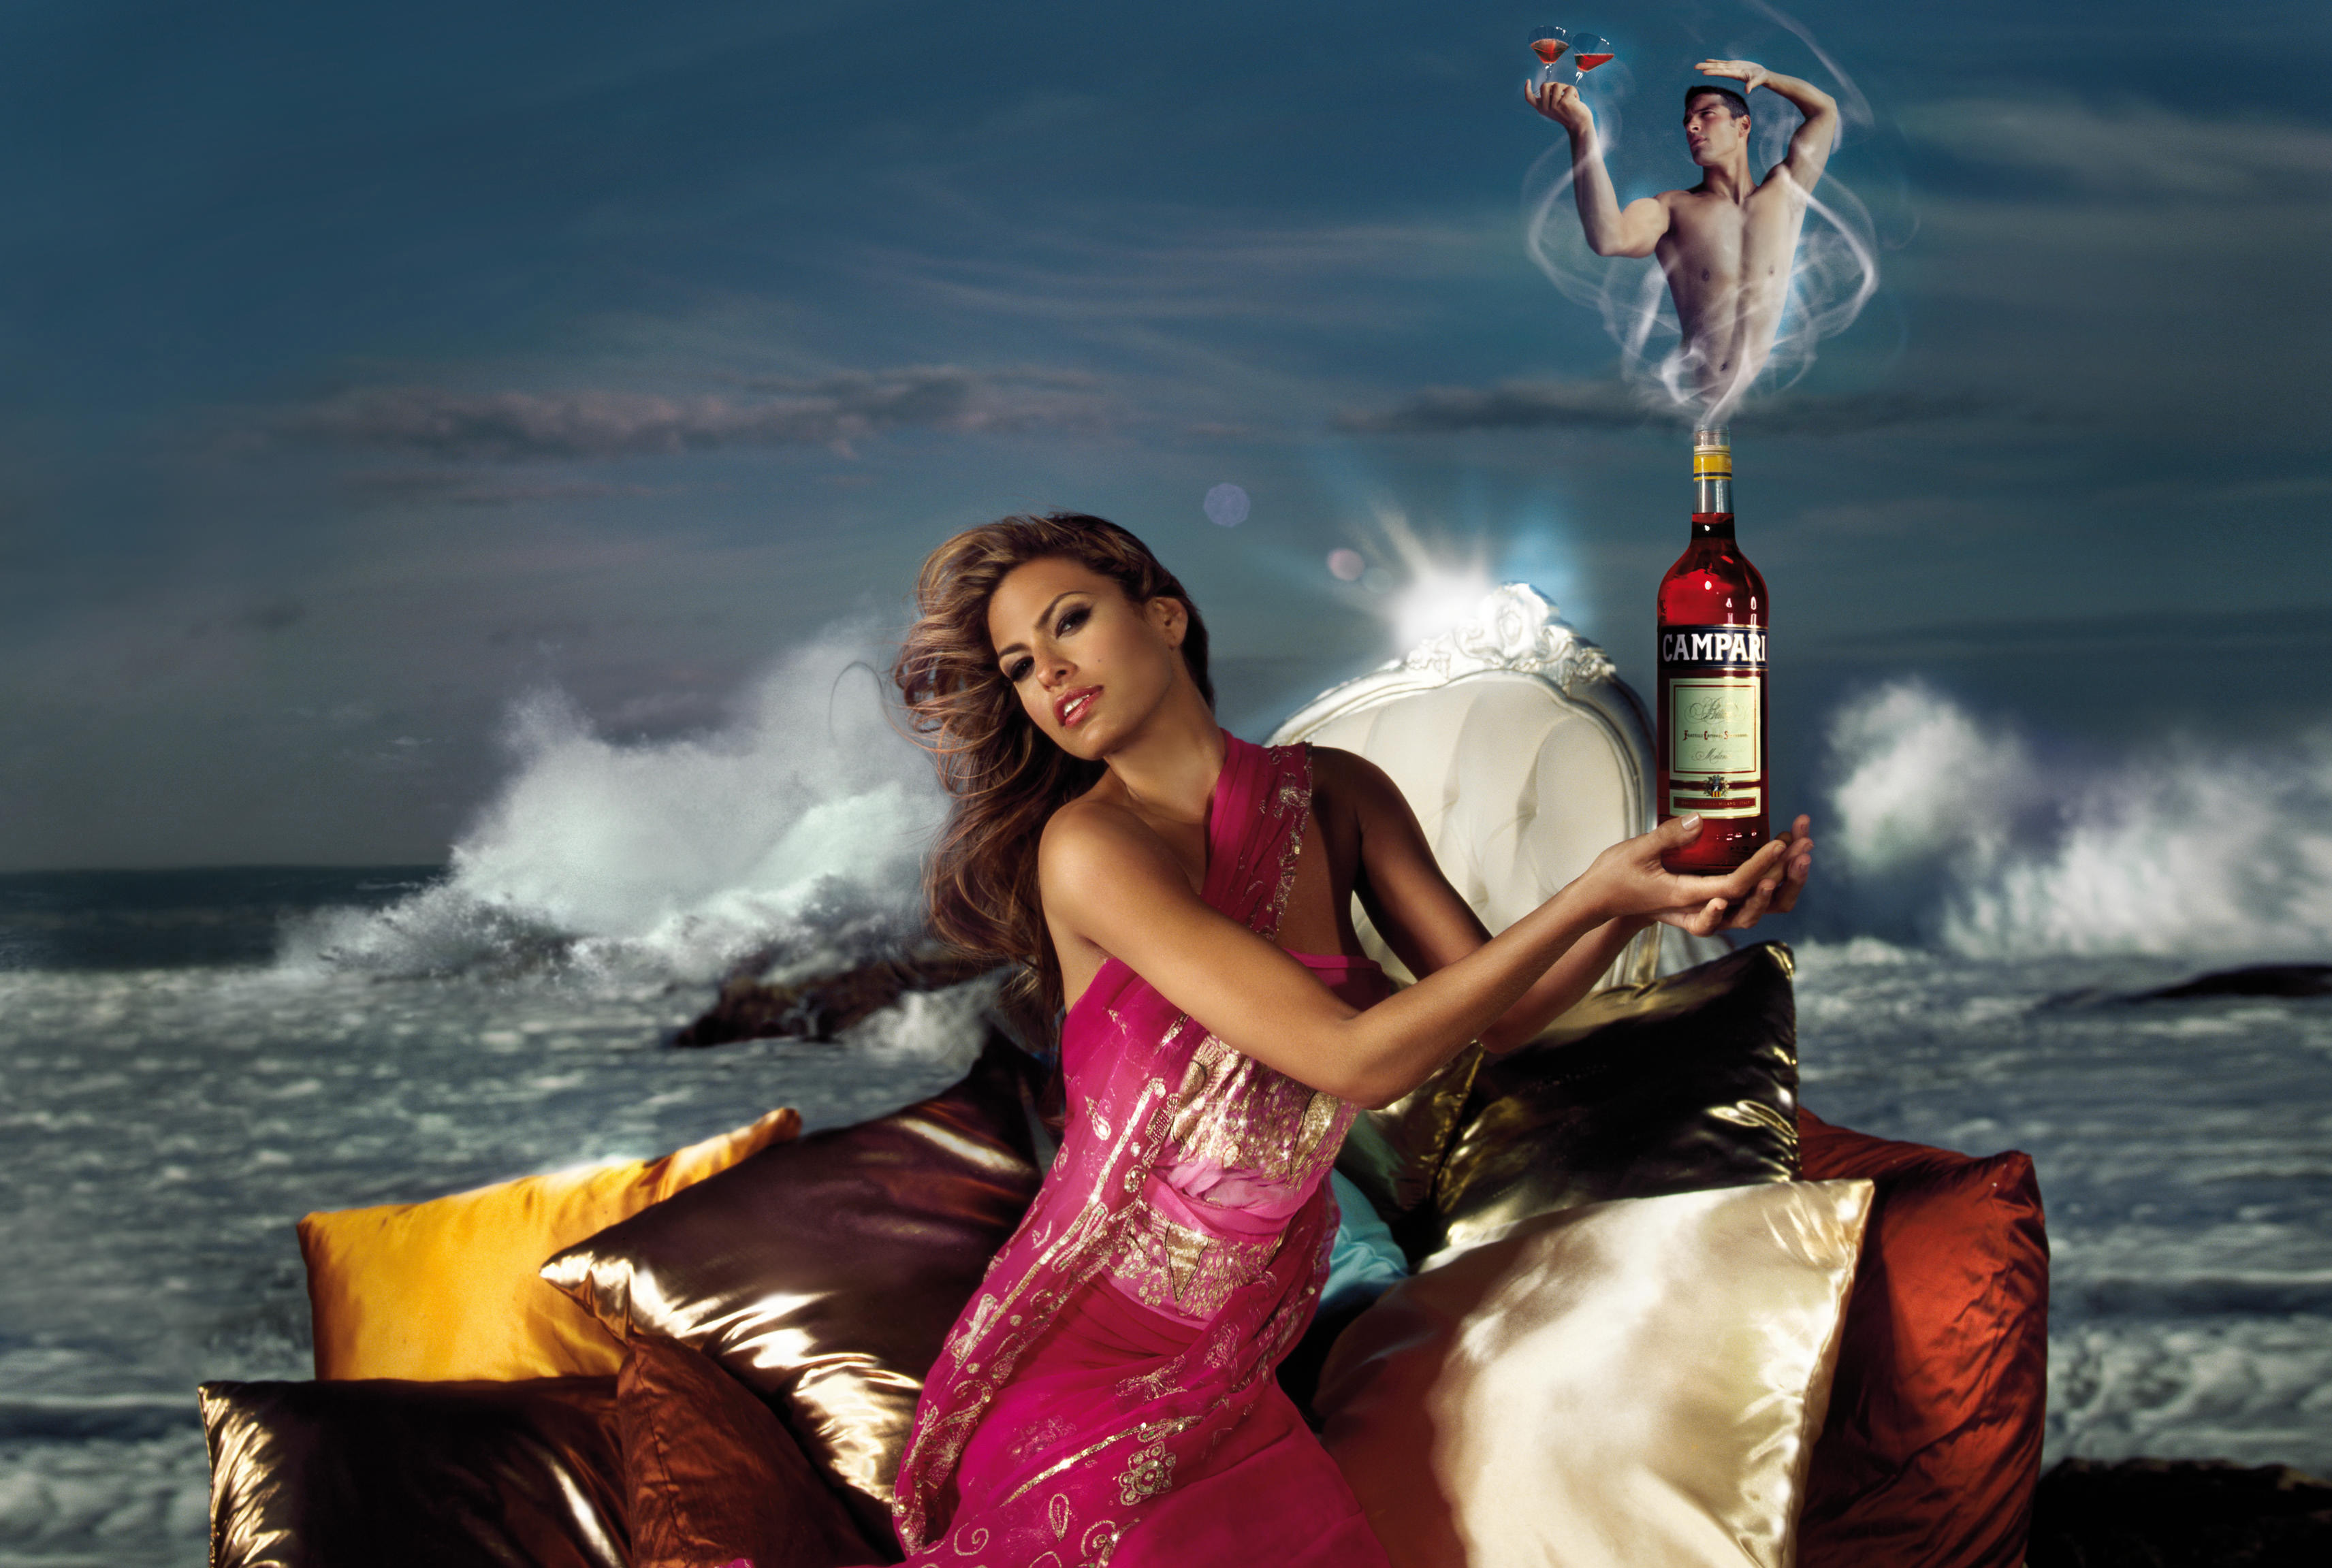 Красива желания женщинам. Реклама Кампари с Евой Мендес.